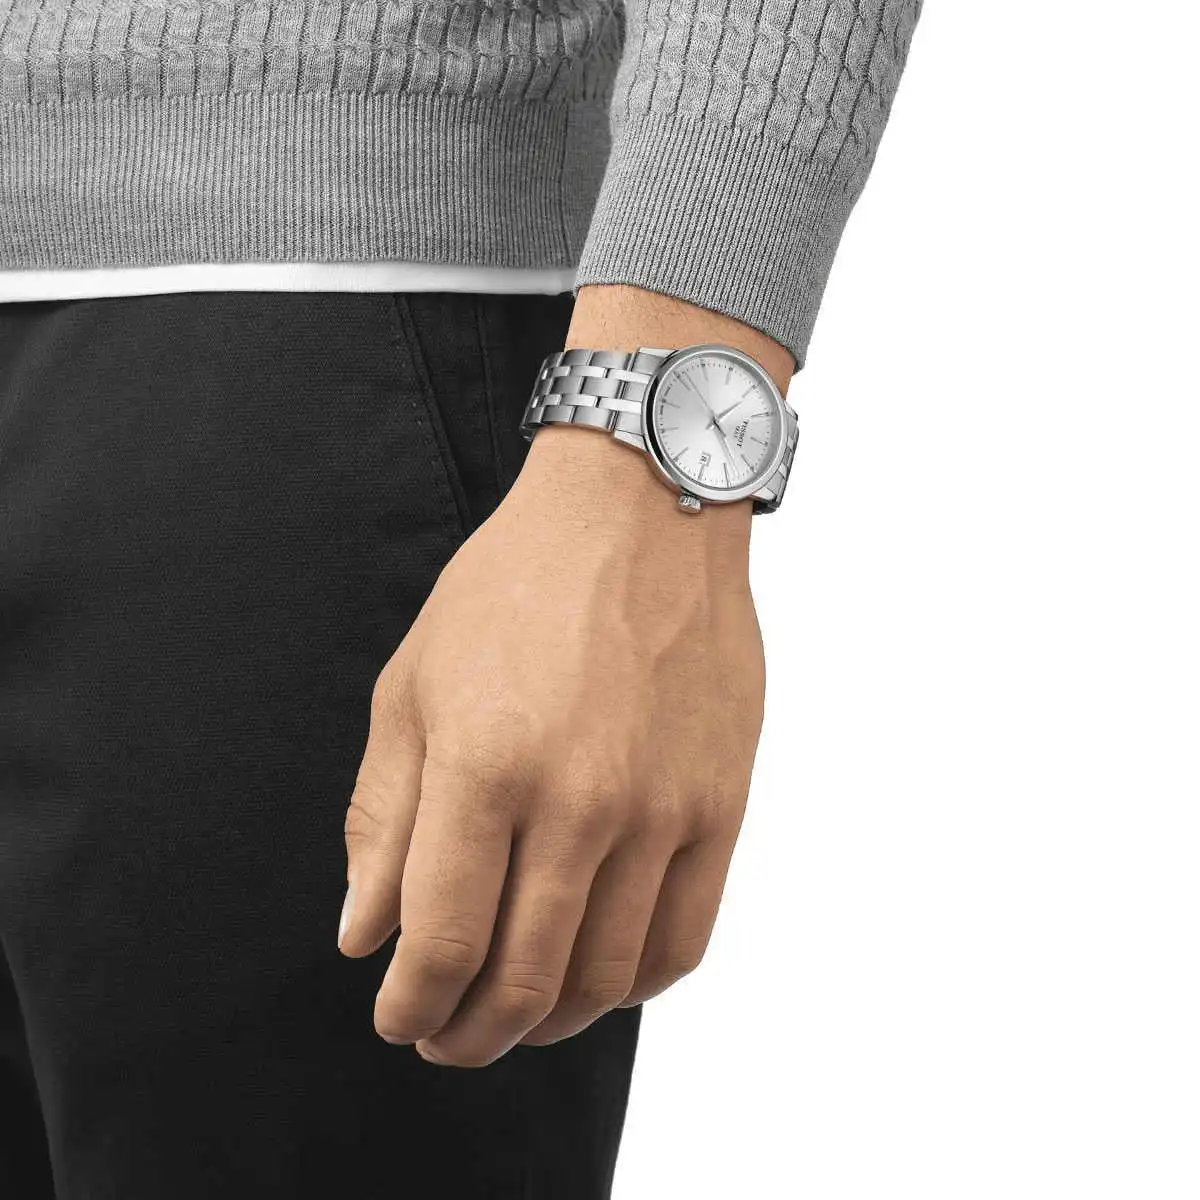 Tissot Swiss Men's Round Shape stainless steel Strap Analog Wrist Watch, Silver, T129-410-11-031